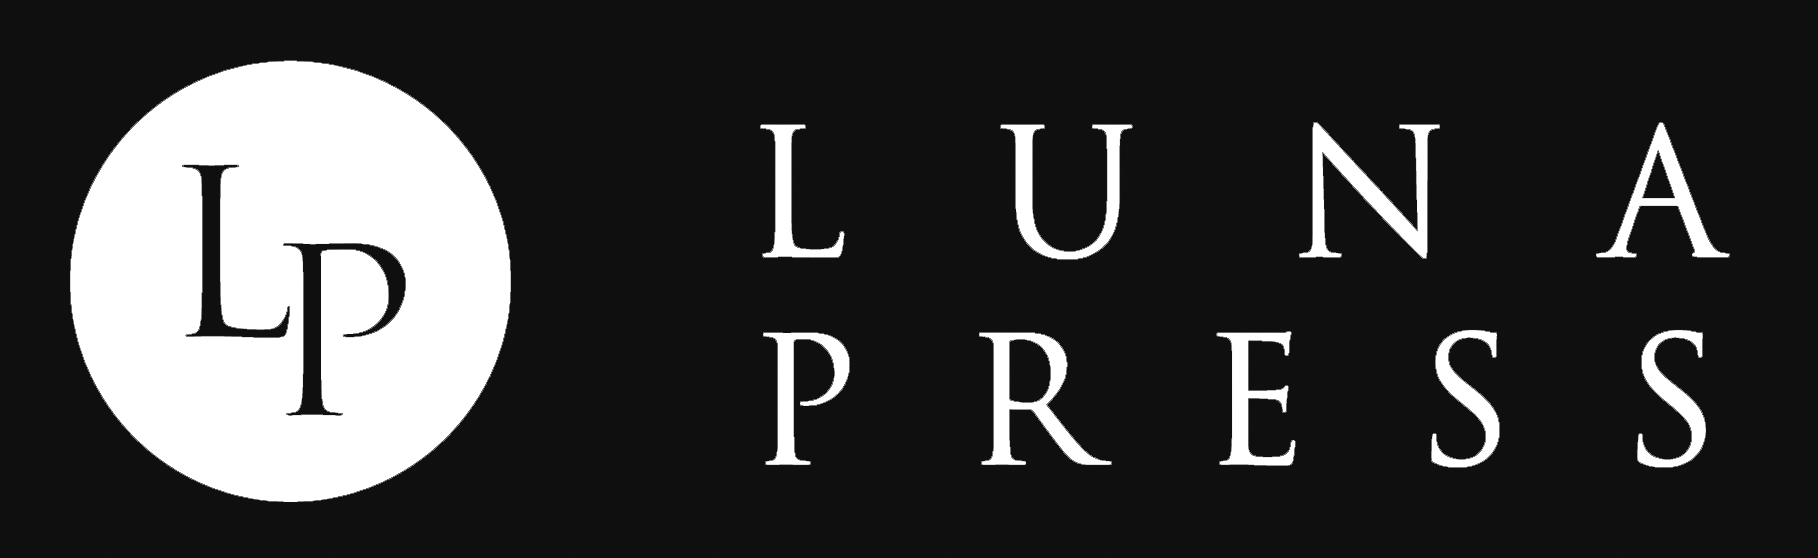 Image displays Luna Press logo - white text on black background